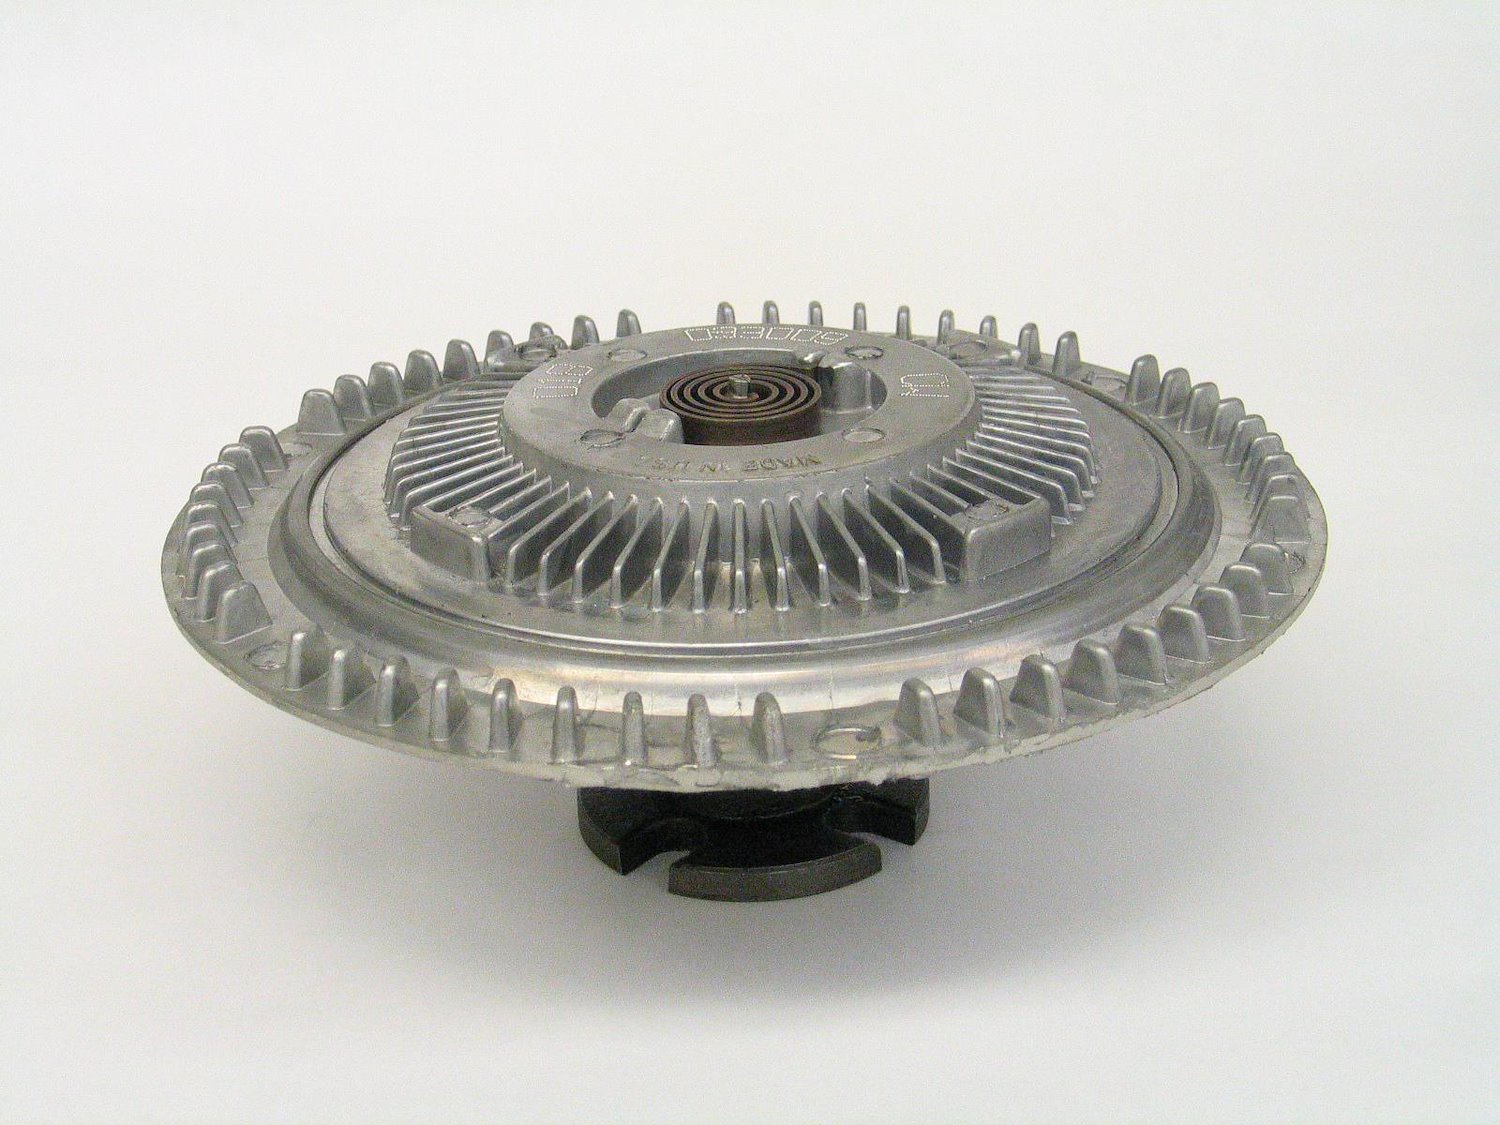 Standard Duty Thermal Fan Clutch for 1970-1974 Chevy